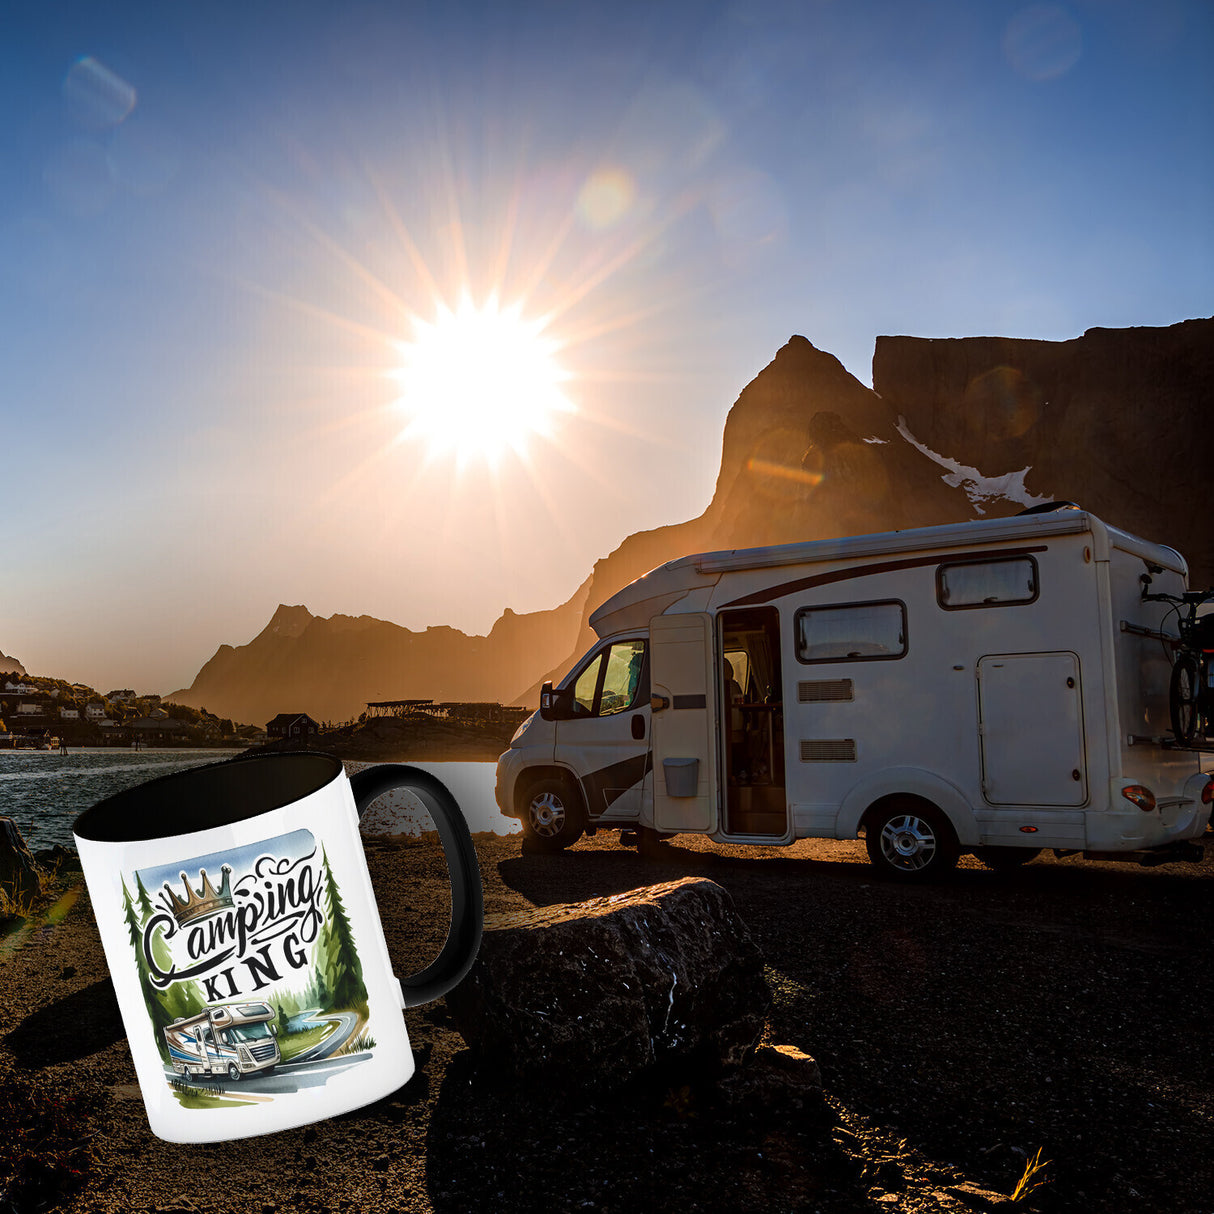 Camping King mit Wohnmobil Kaffeebecher